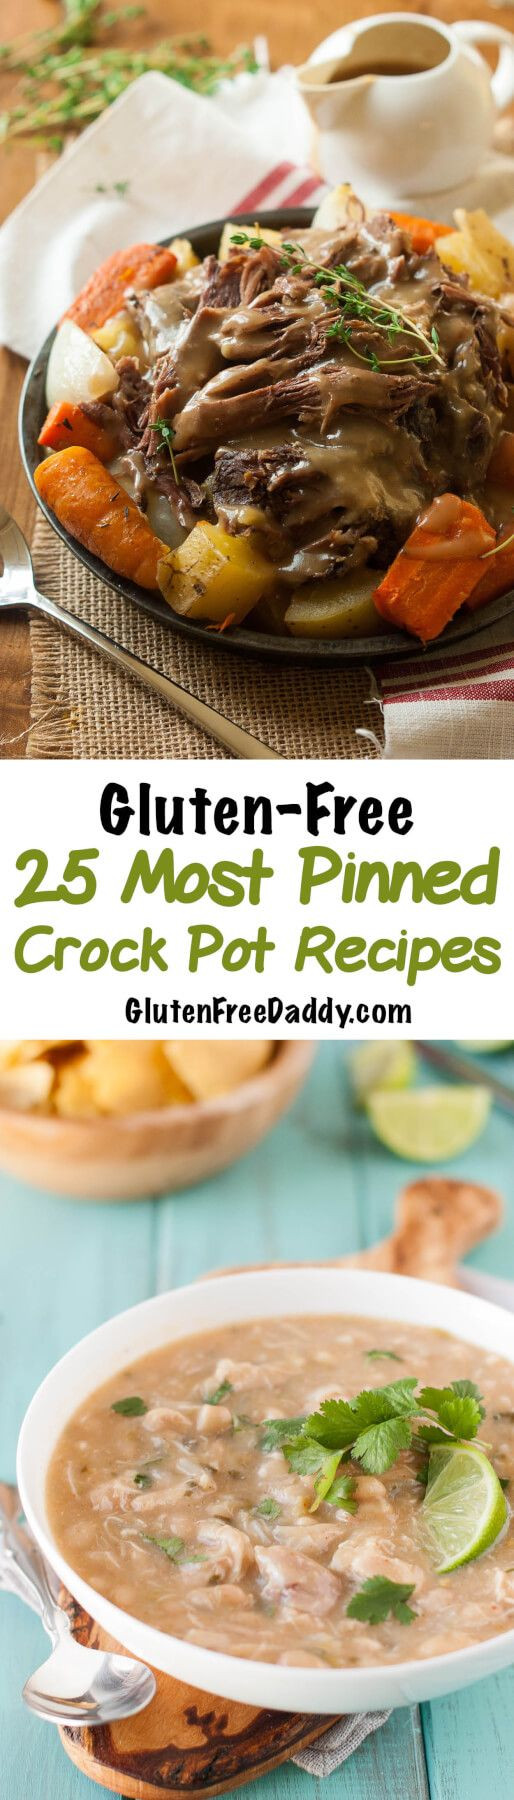 Dairy Free Crockpot Recipes
 Best 25 Gluten free ideas on Pinterest